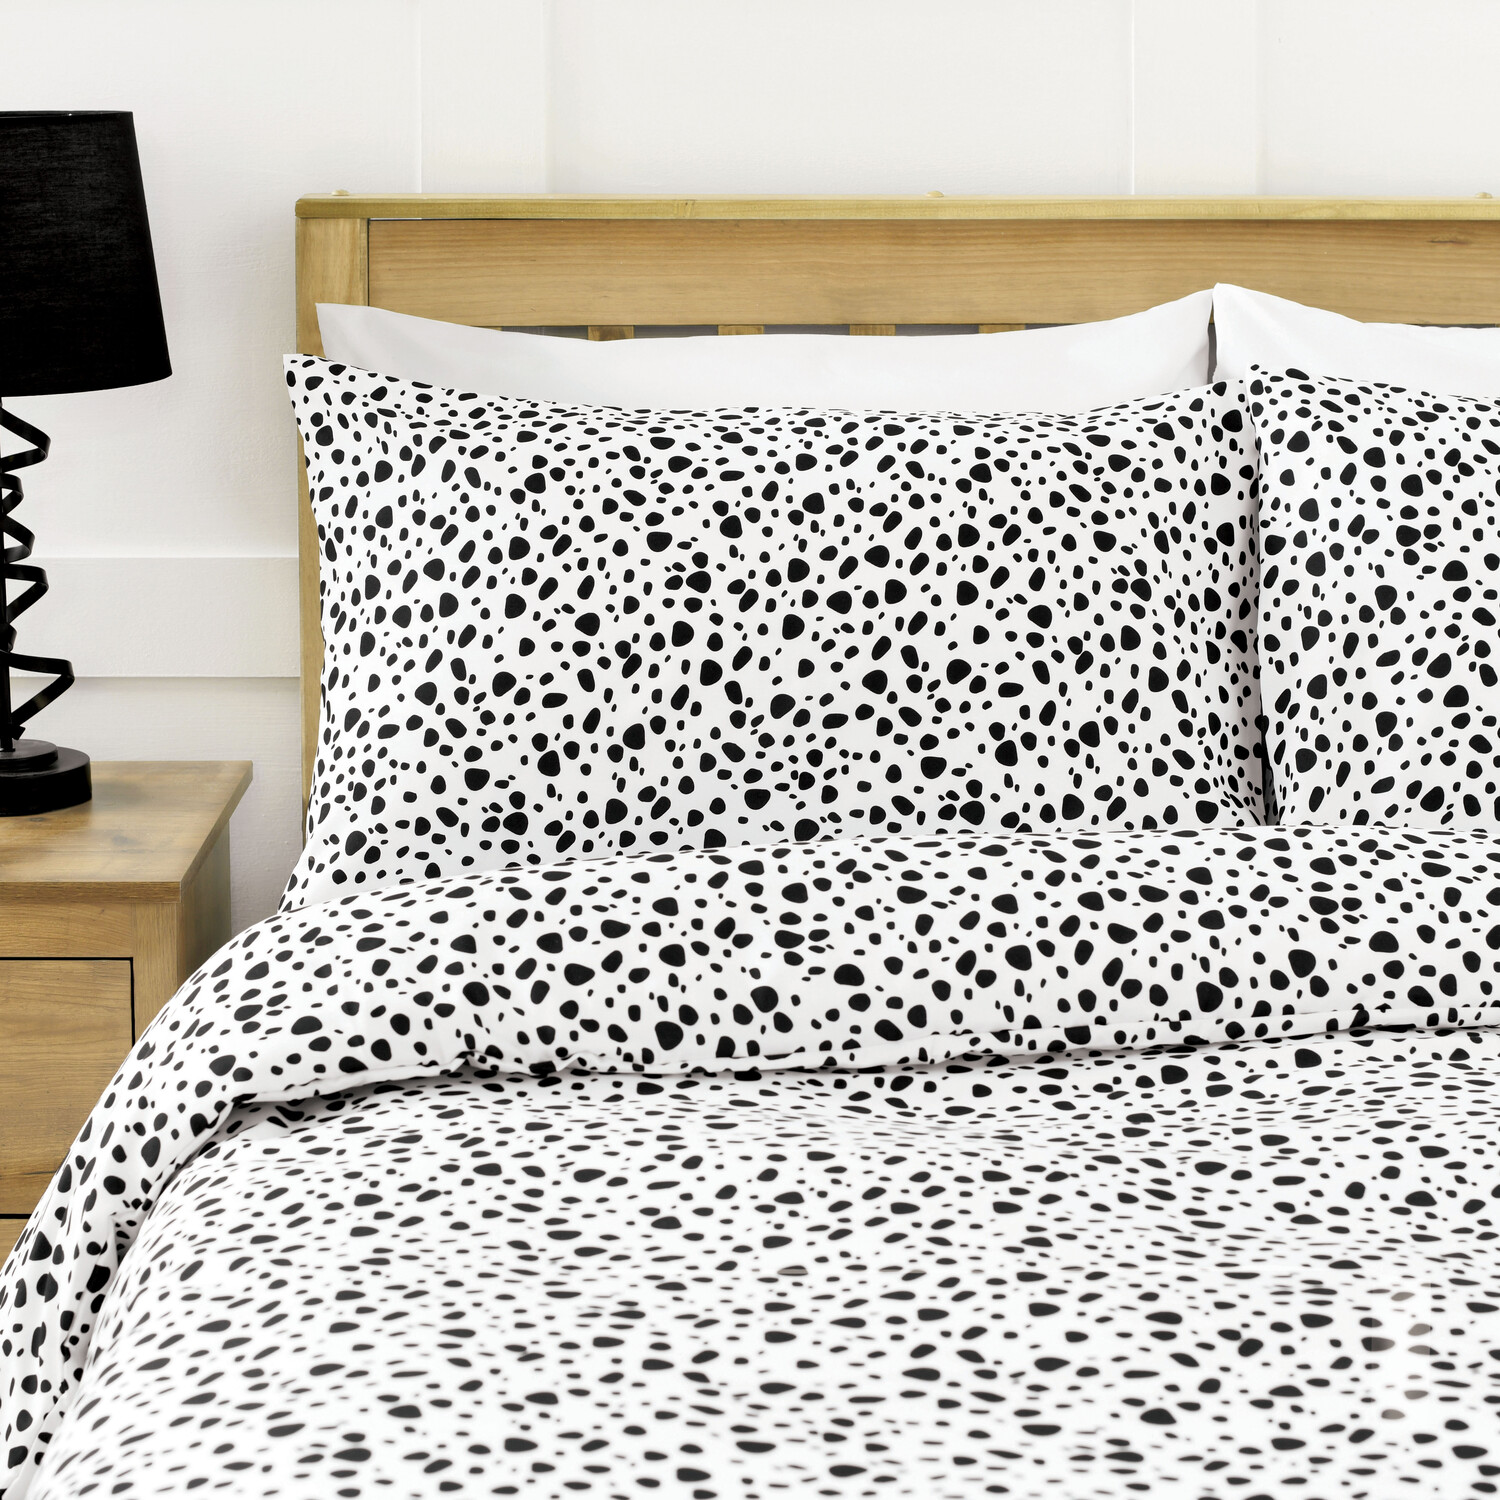 My Home Dottie Double Monochrome Duvet Cover and Pillowcase Set Image 3